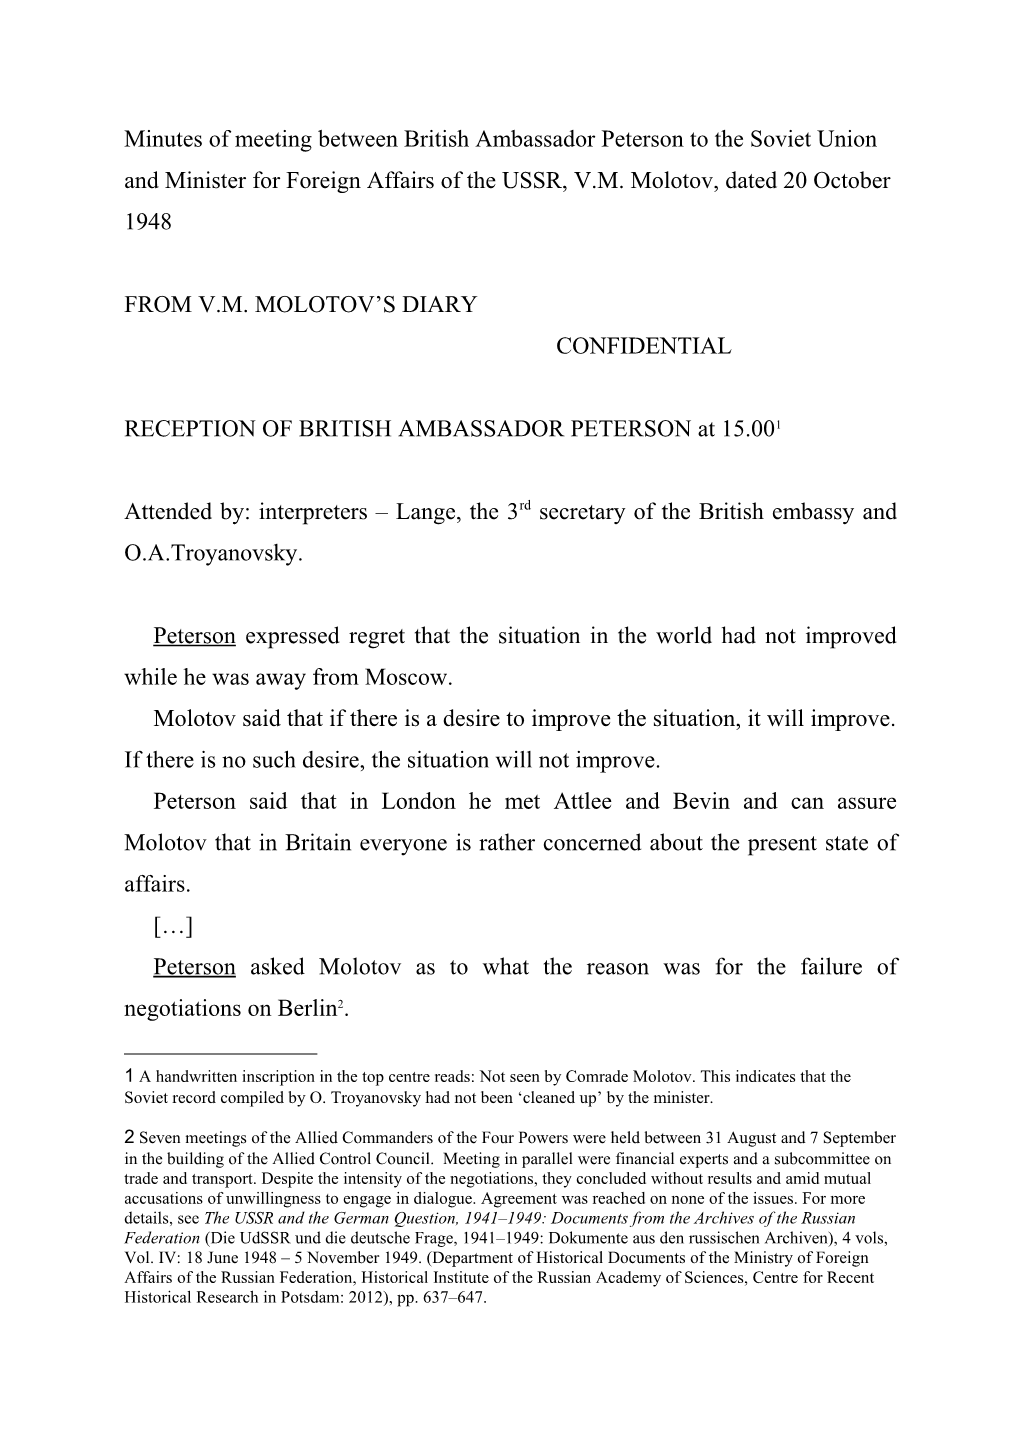 1948-10-20 Peterson Molotov Meeting Minutes